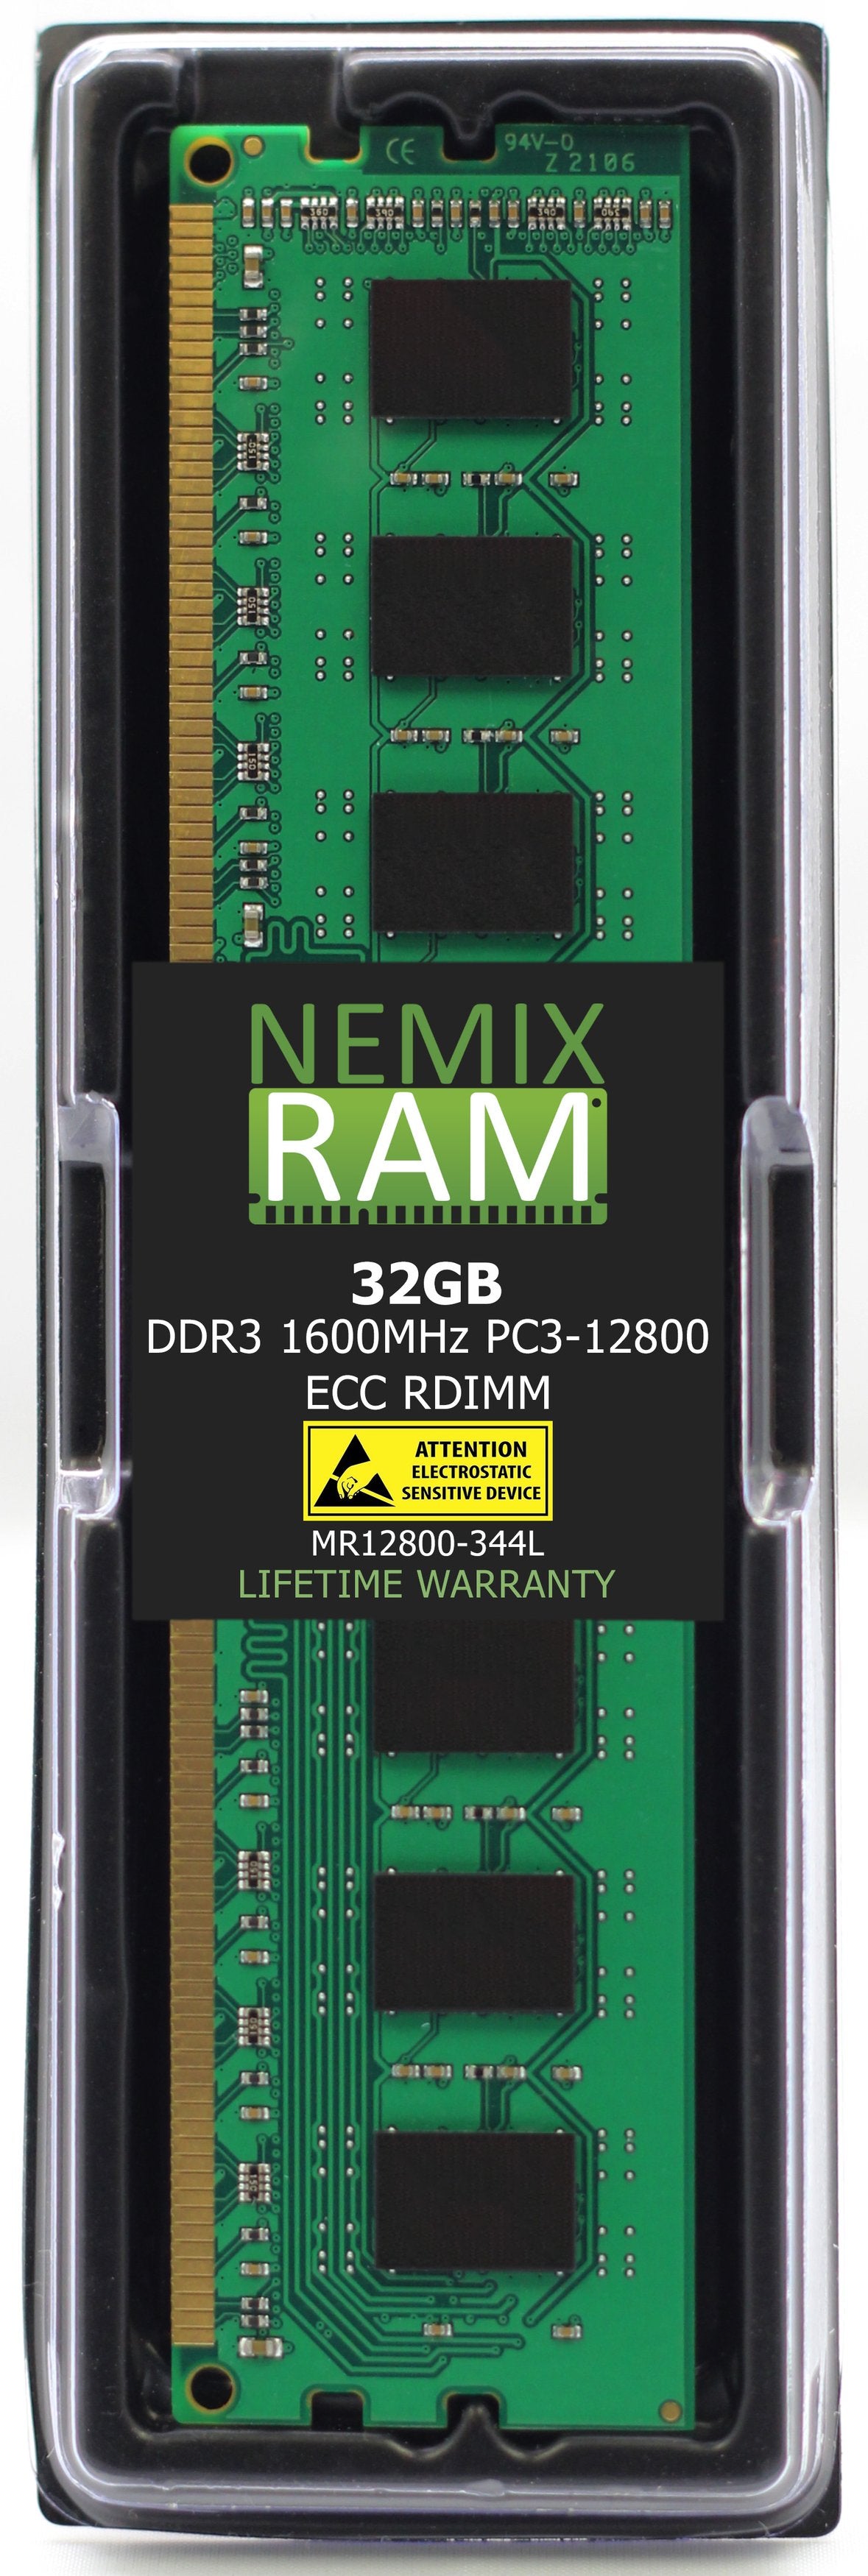 Hynix HMT84GR7DMR4A-PB 32GB DDR3 1600MHZ PC3-12800 RDIMM Compatible Memory Module